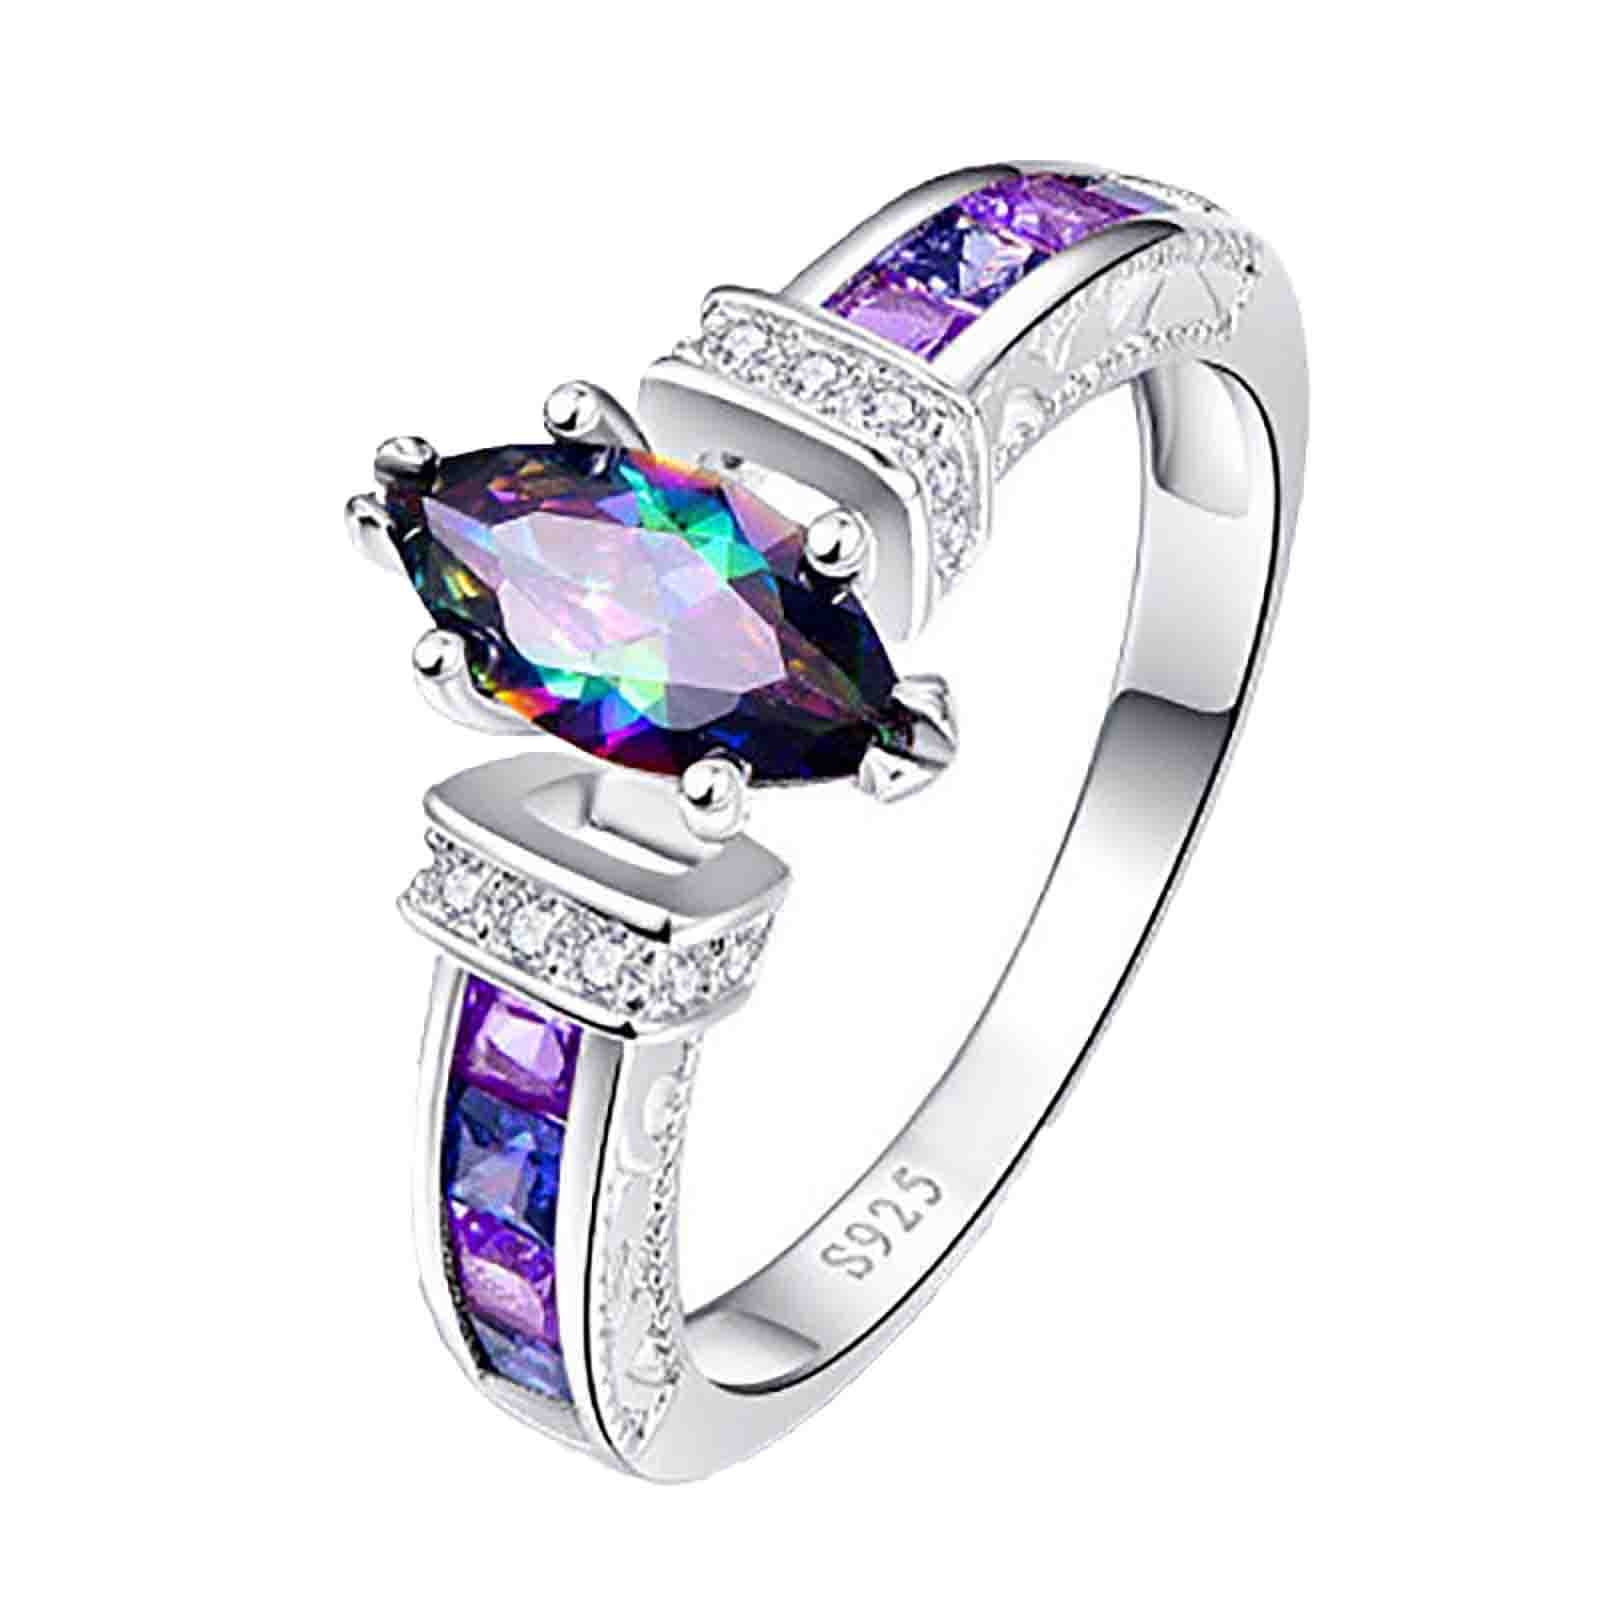 Elegant 925 Silver Jewelry Pink Sapphire Women Wedding Jewelry Gift Size 6-10 